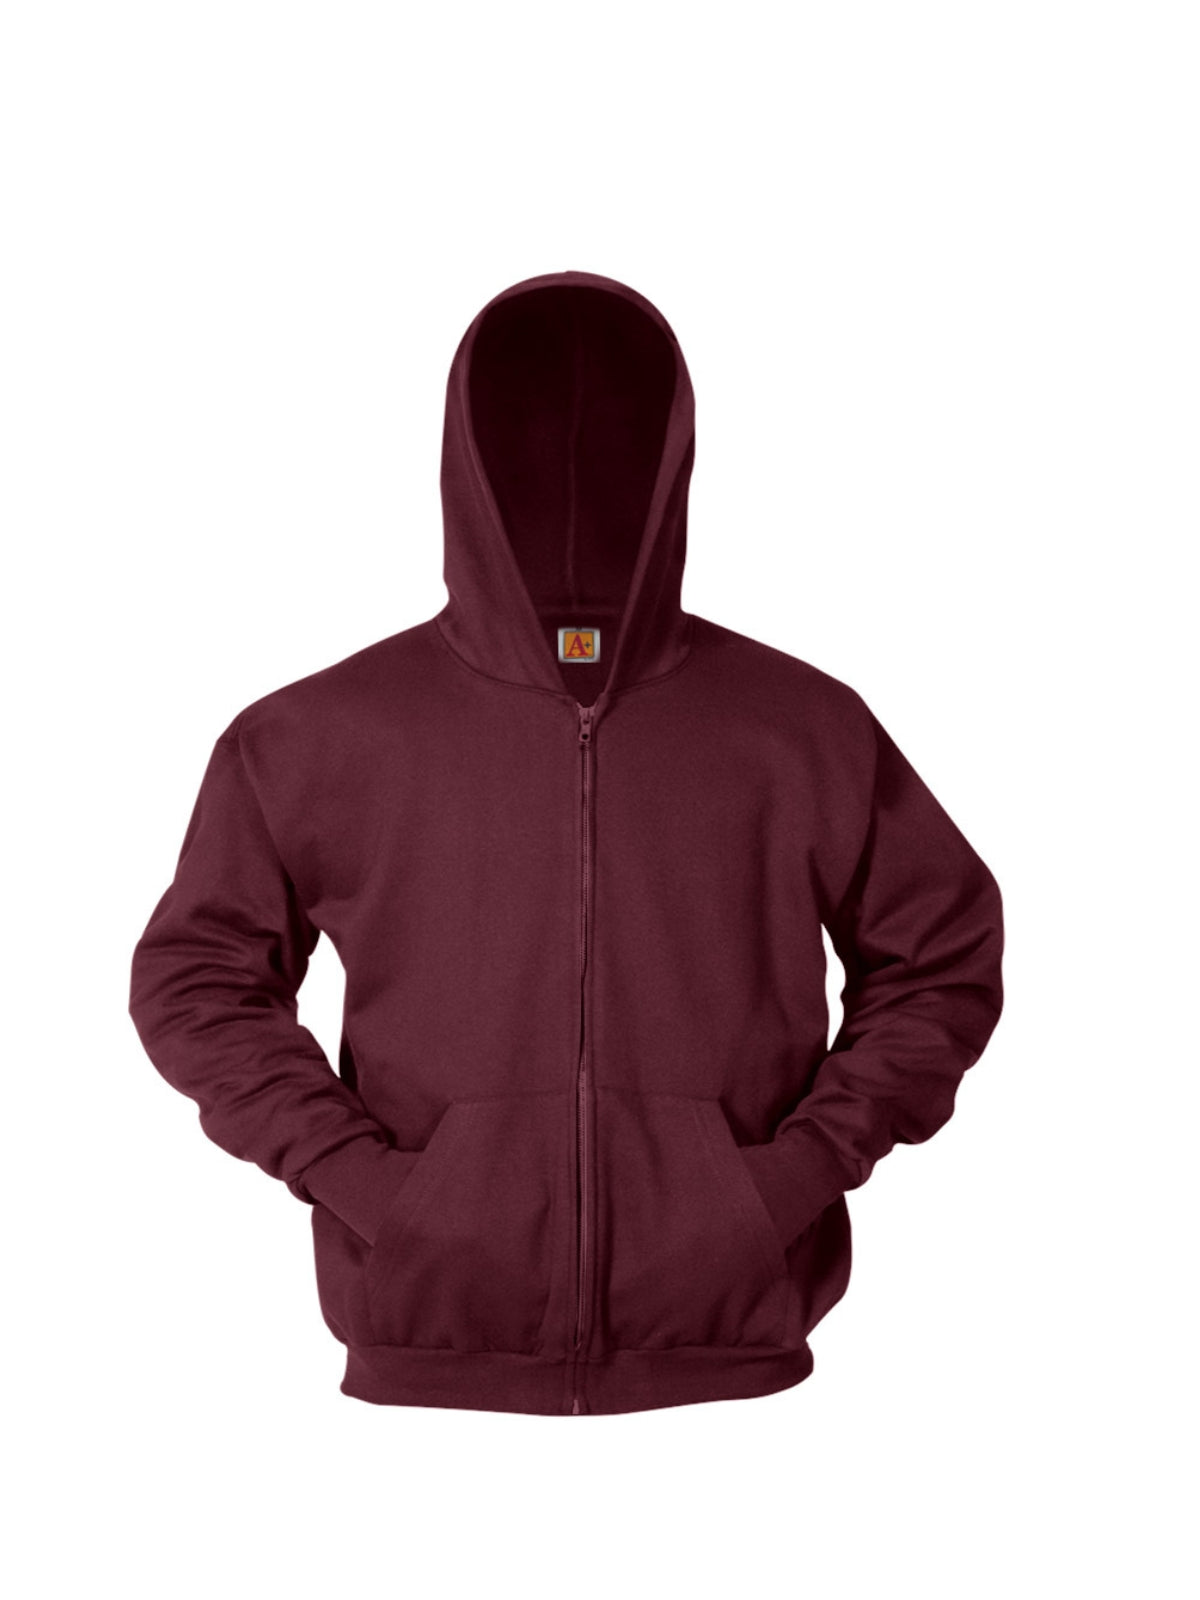 Unisex Hooded Sweatshirt - 6247 - Wine